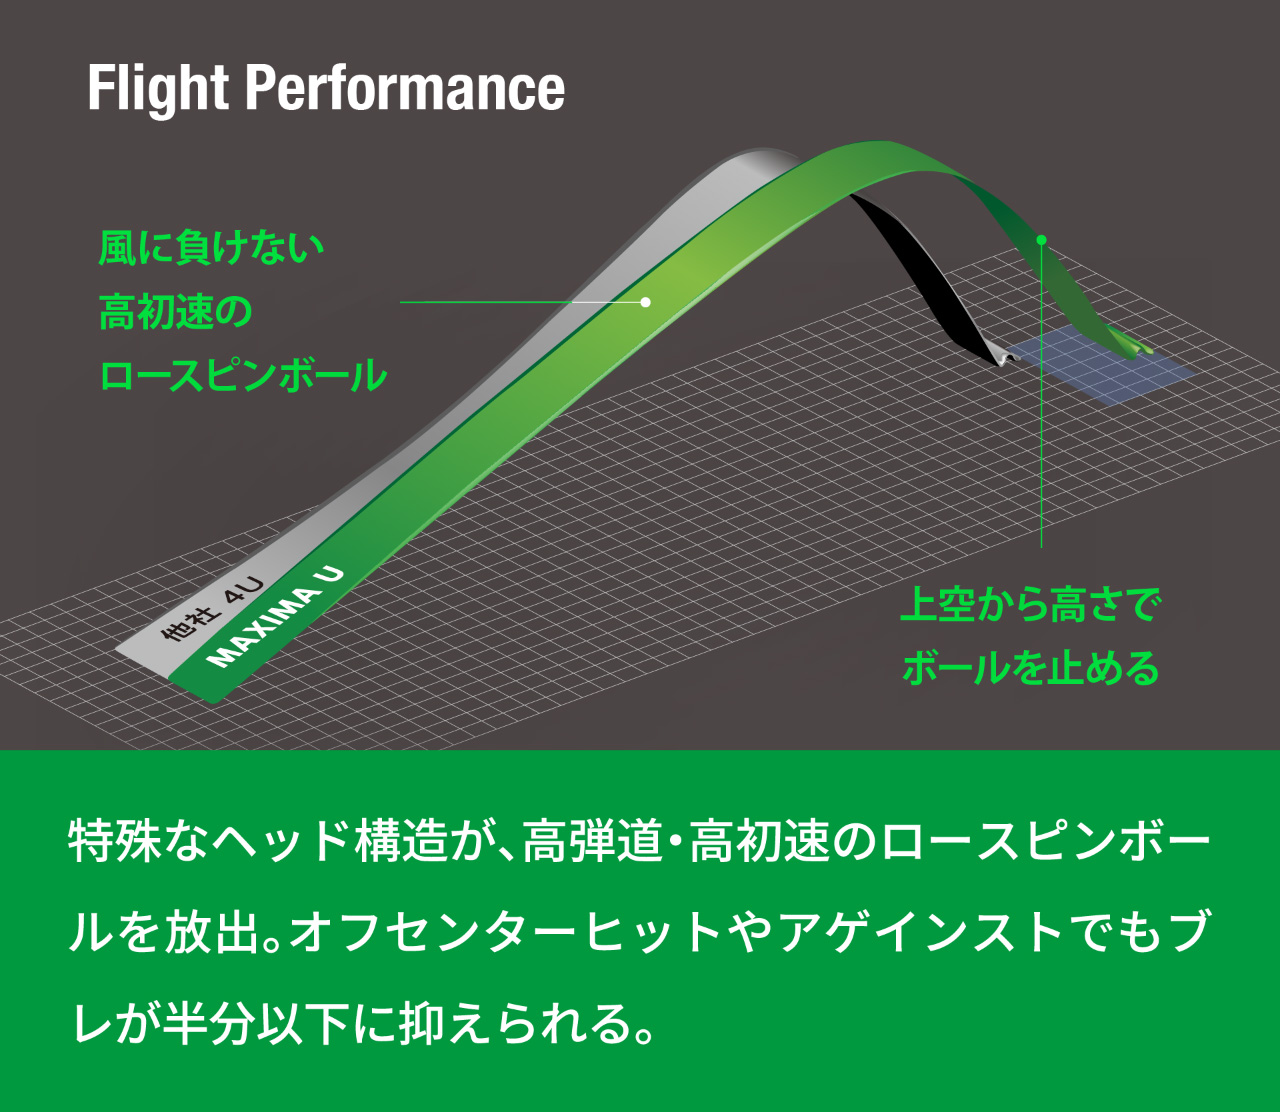 Flight Performance